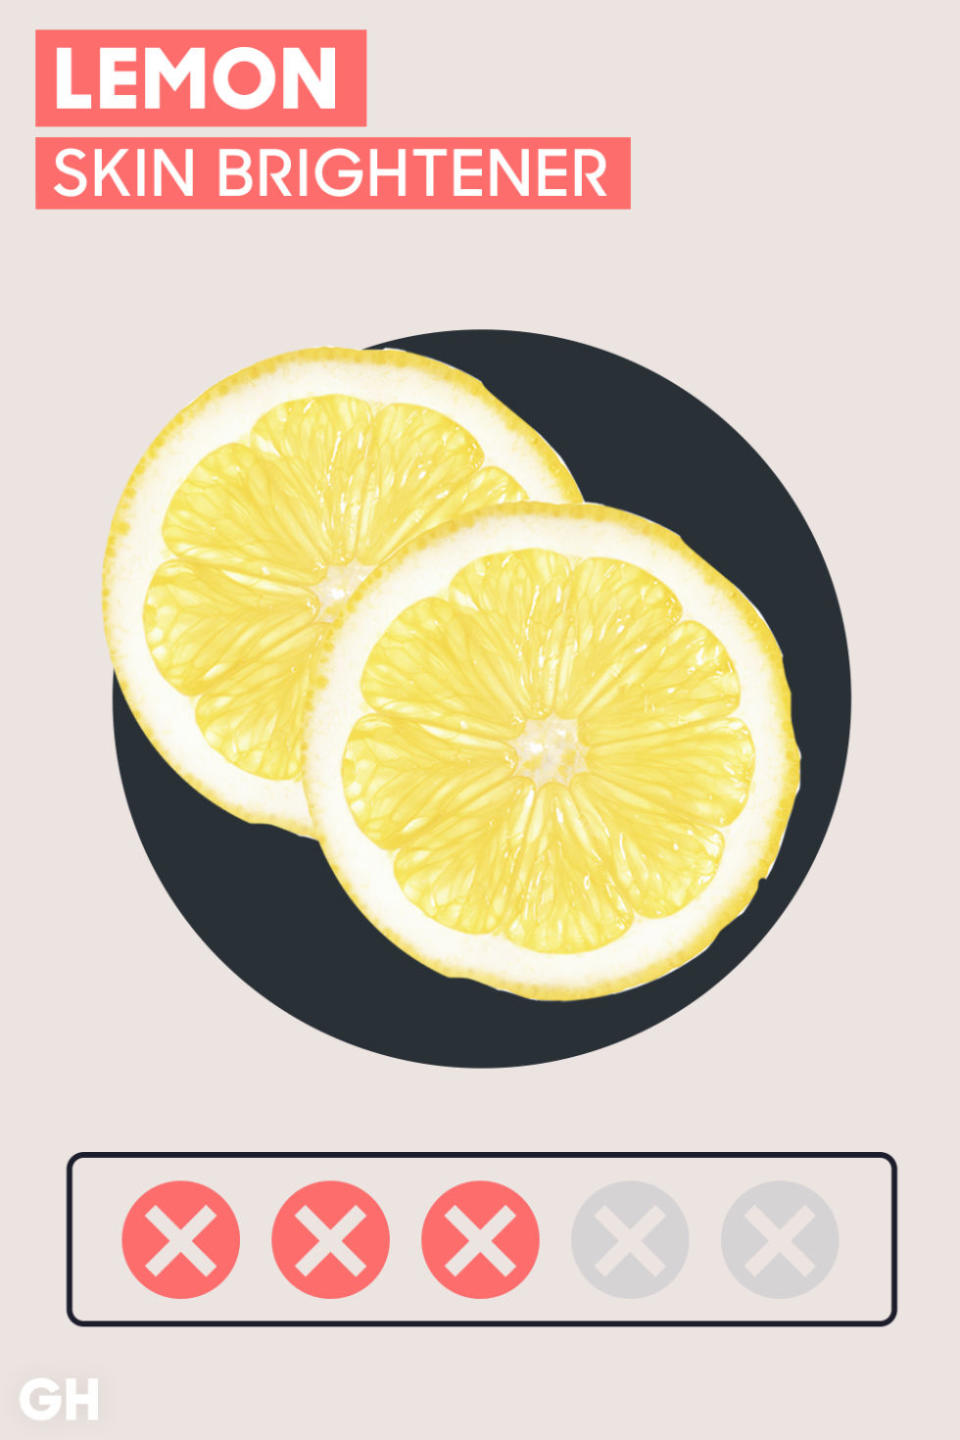 Applying lemon directly to your skin.